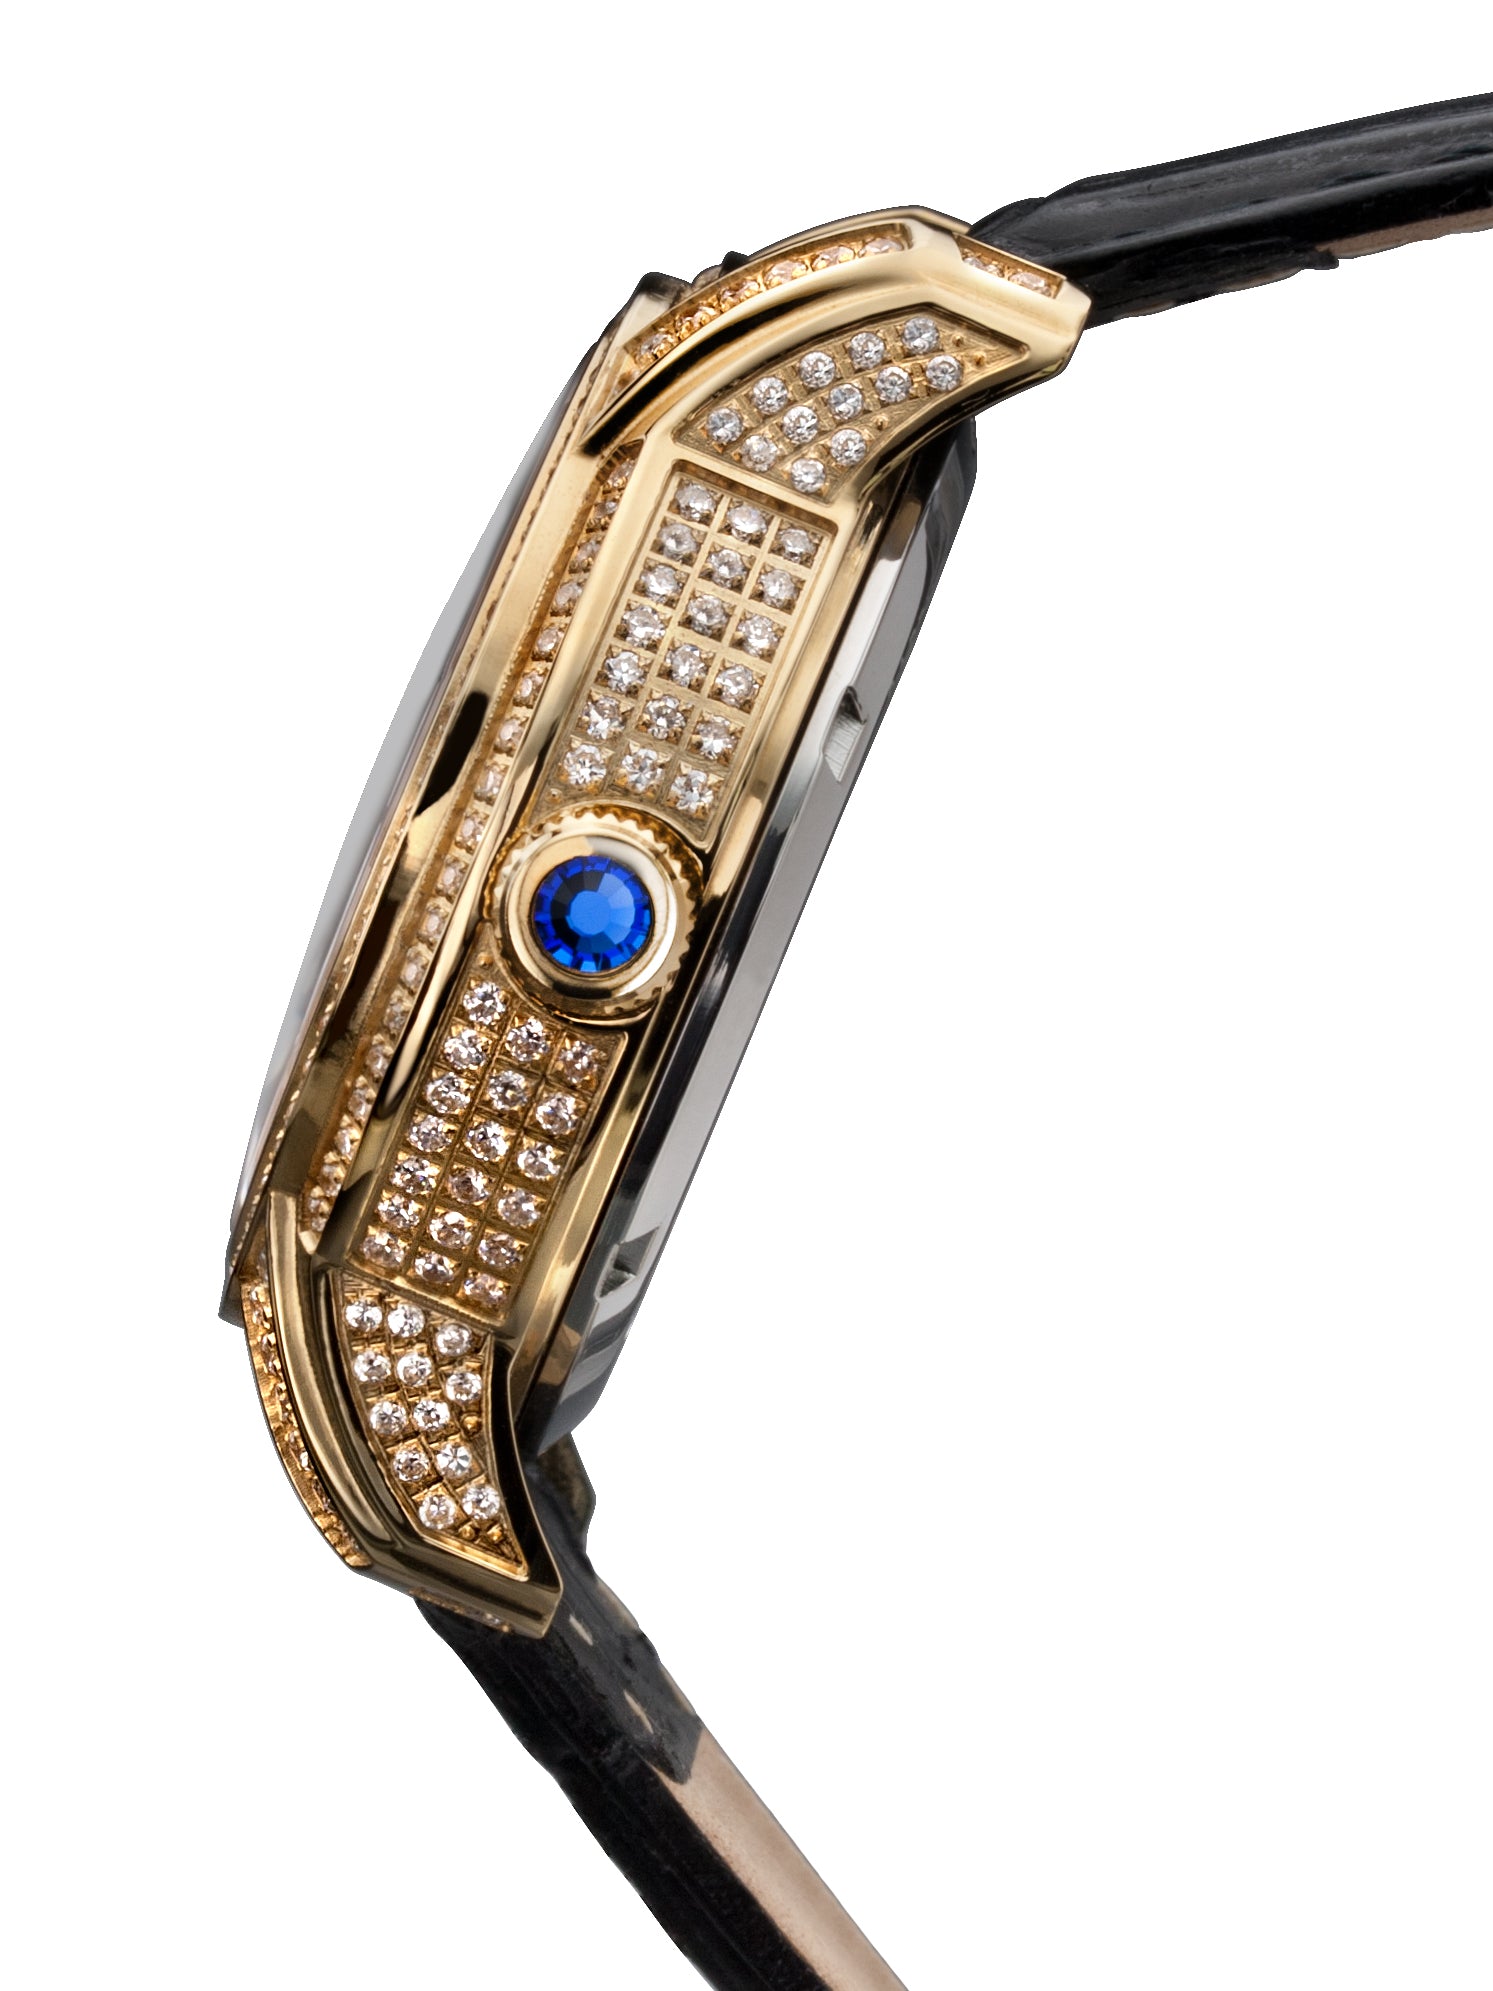 Automatic watches — Duchess — Hindenberg — gold black